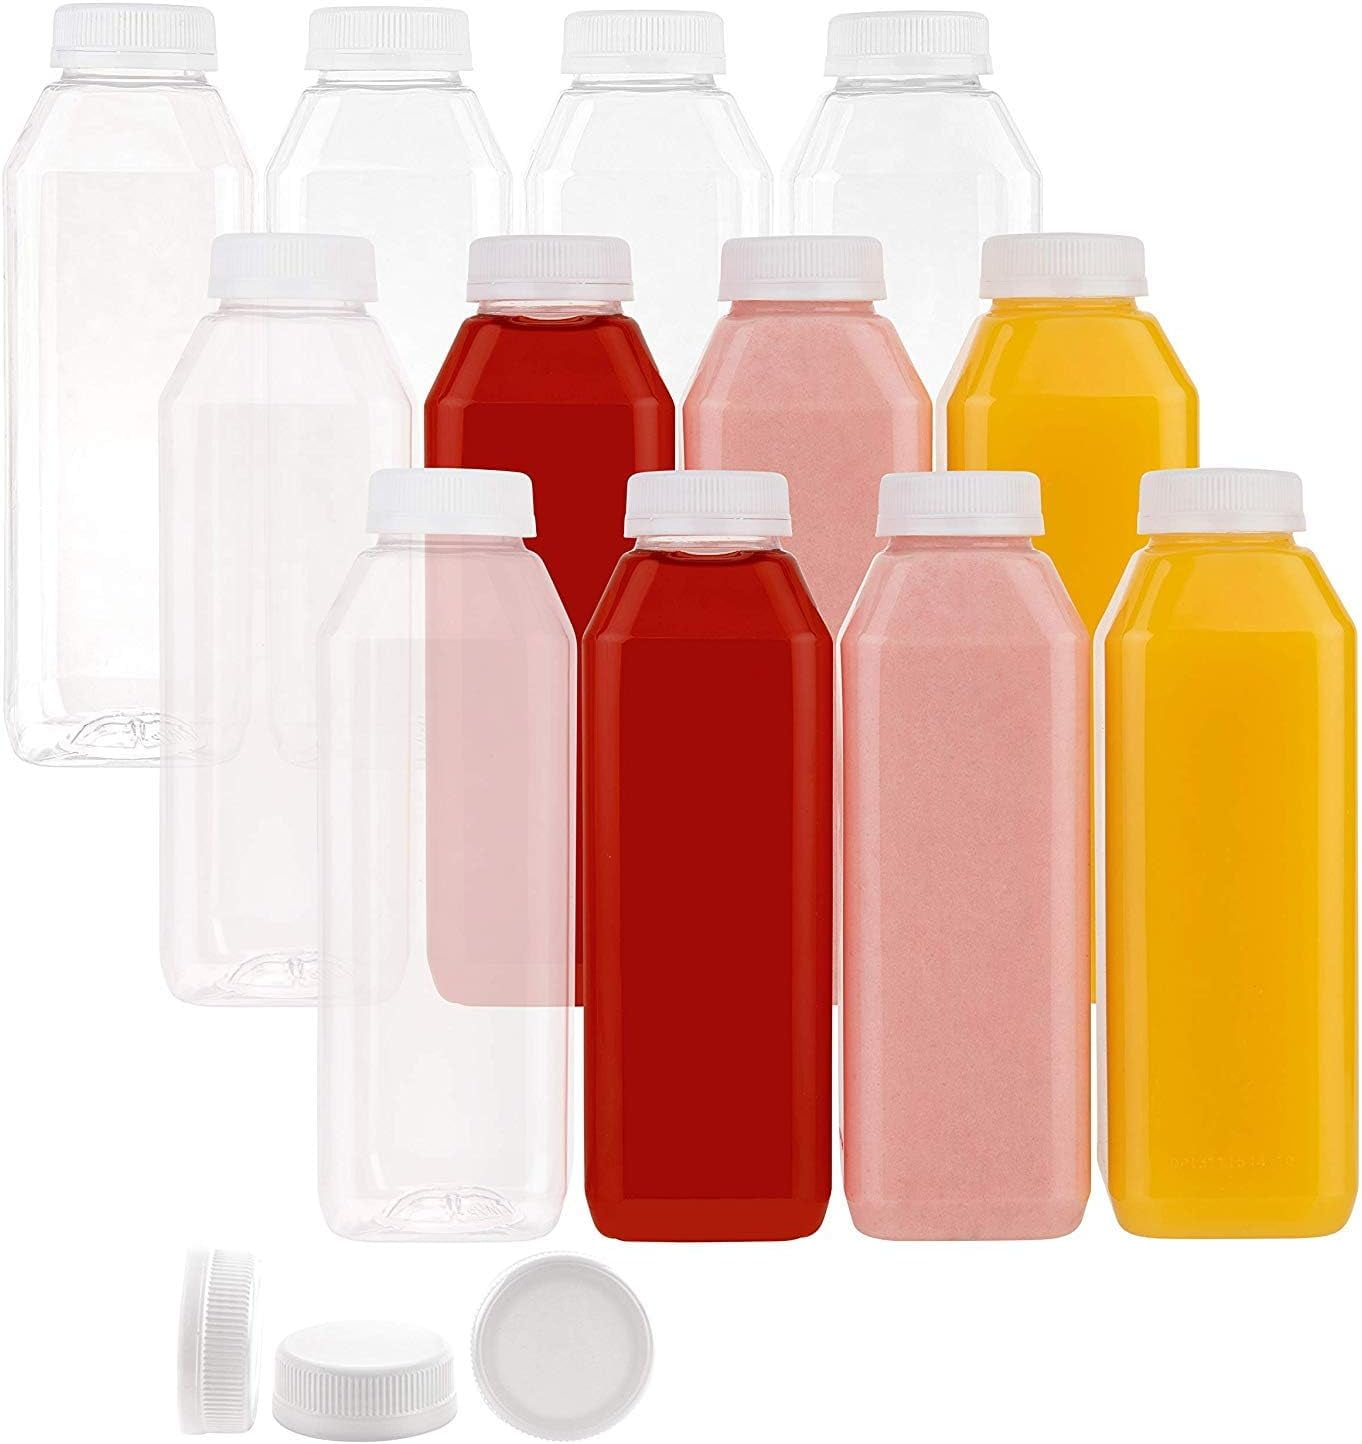 Clearance! Clear Plastic Water Bottles - 16 oz Plastic Bottles